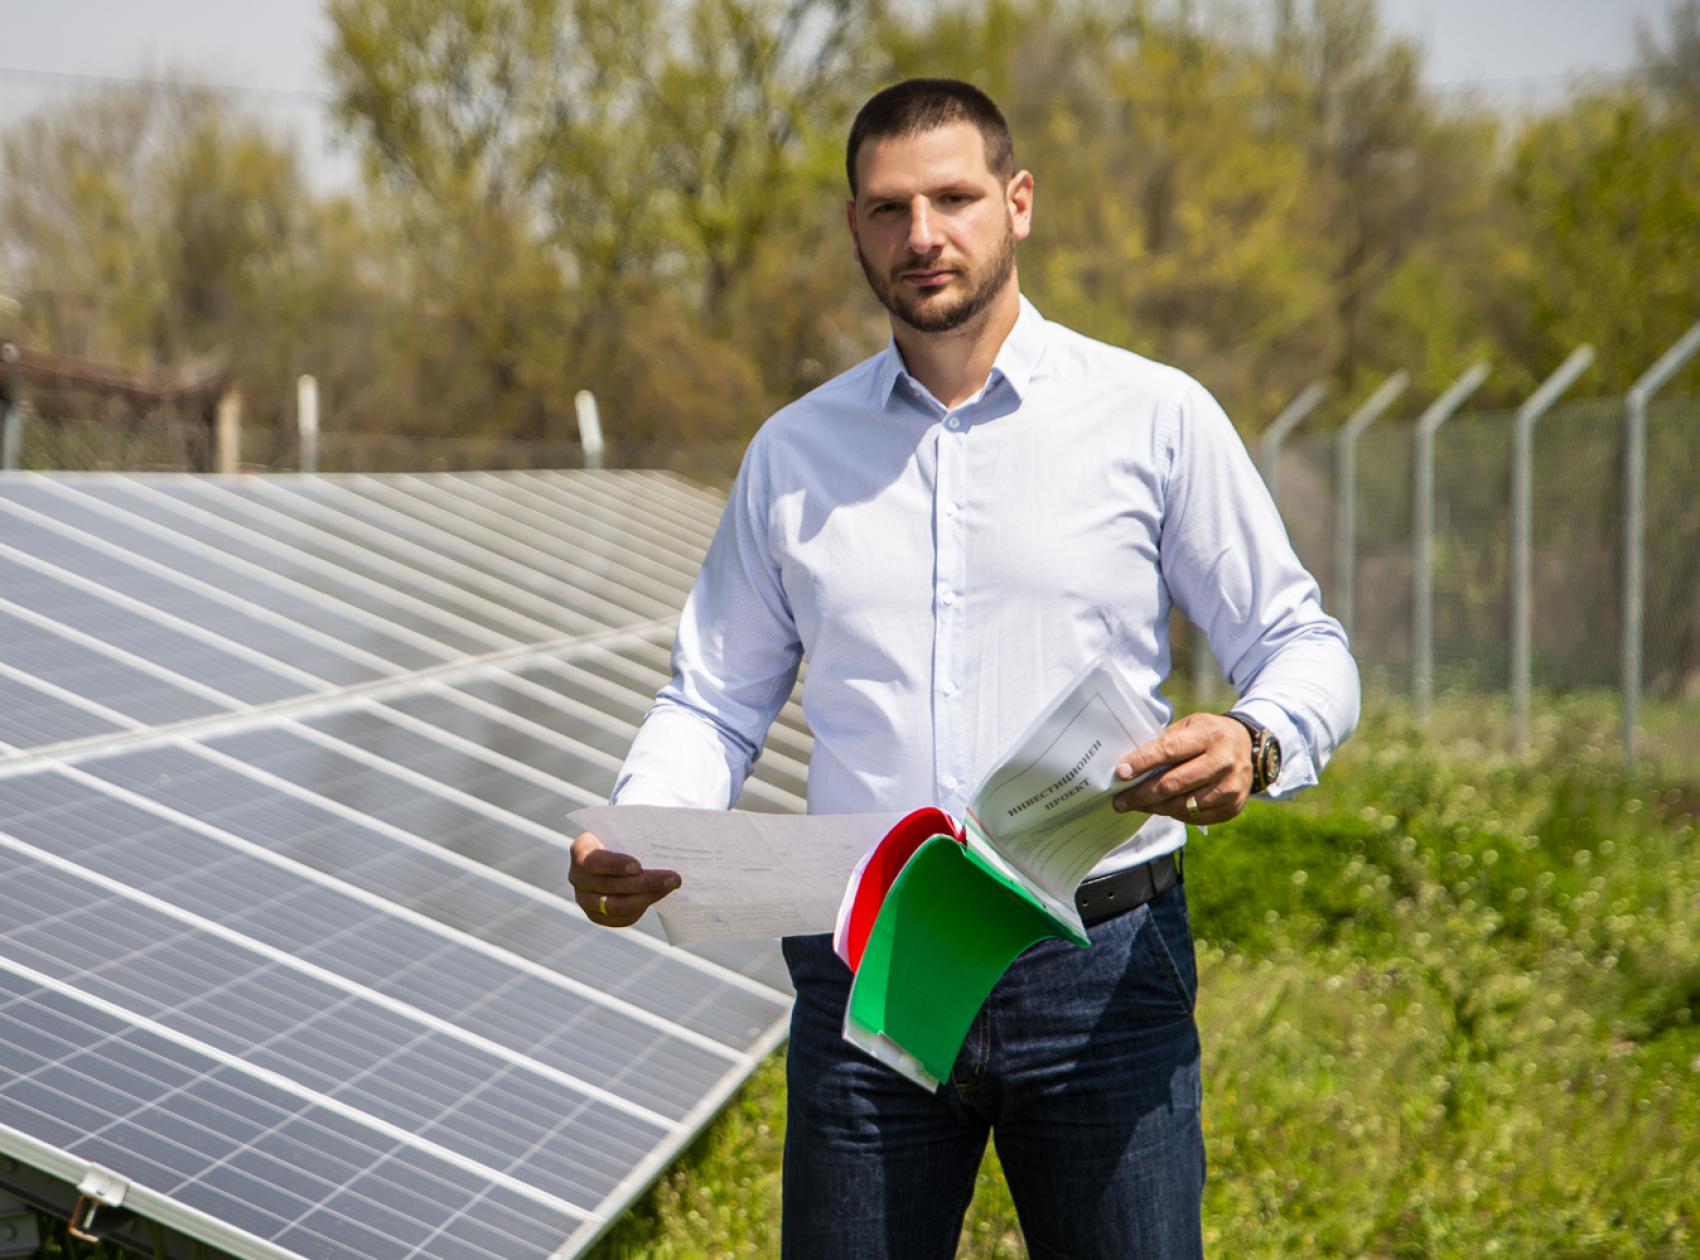 Veselin Todorov, Chairman of Solar Academy Bulgaria Association Many administrative